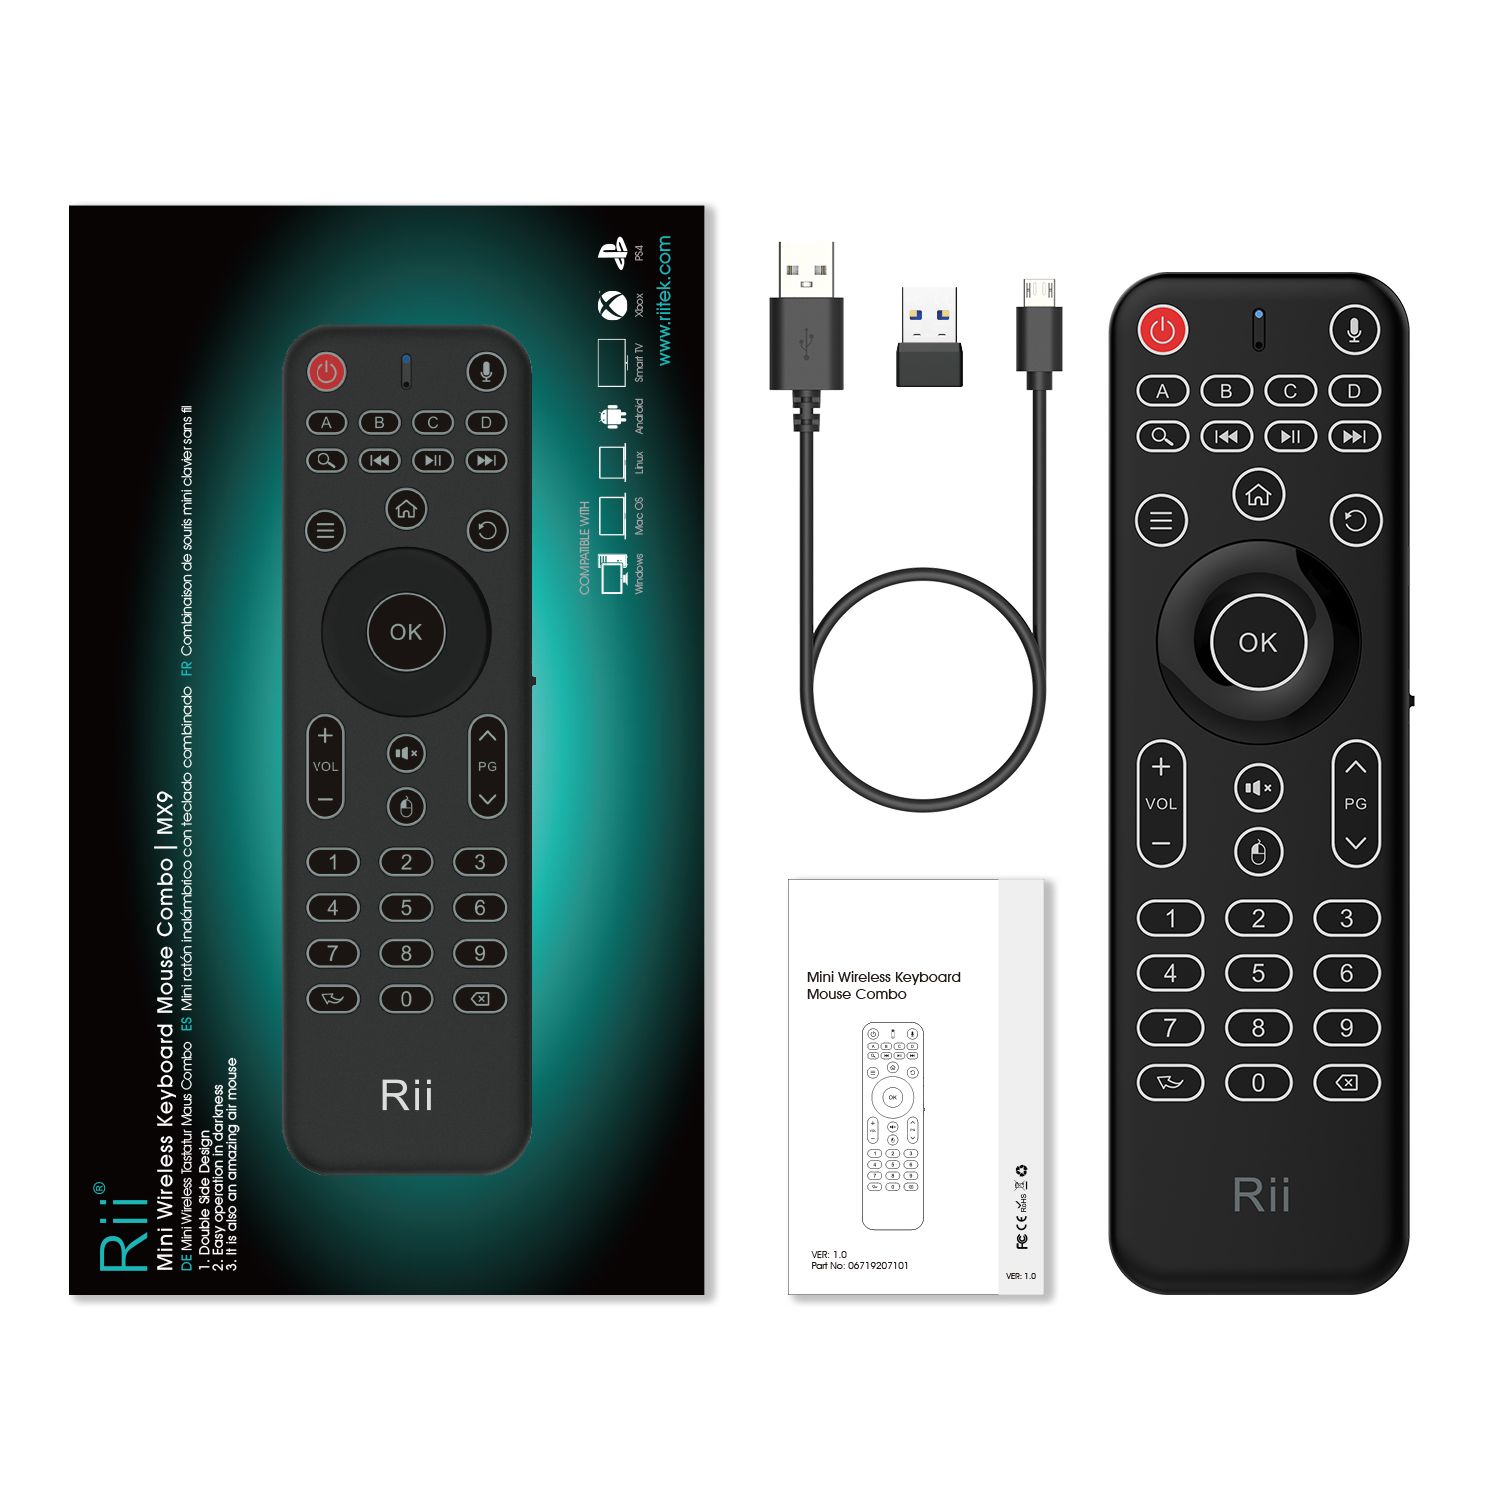 Rii-MX9-24GHz-Wireless-Mini-Keyboard-Support-TV-PC-Computer-TV-Box-Backlight-with-Microphone-Keybora-1761145